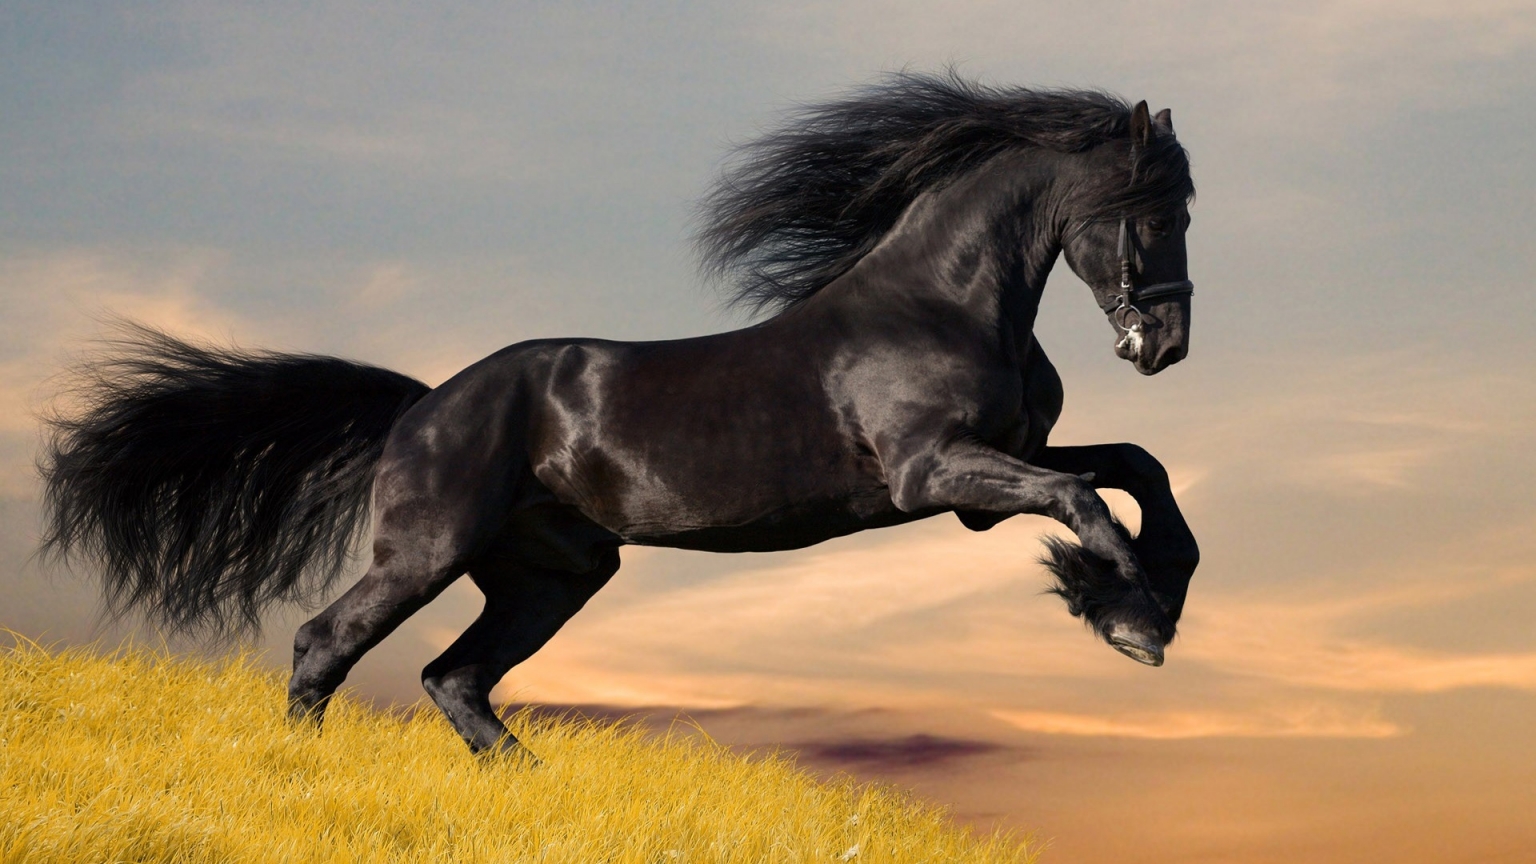 Amazing Black Horse for 1536 x 864 HDTV resolution